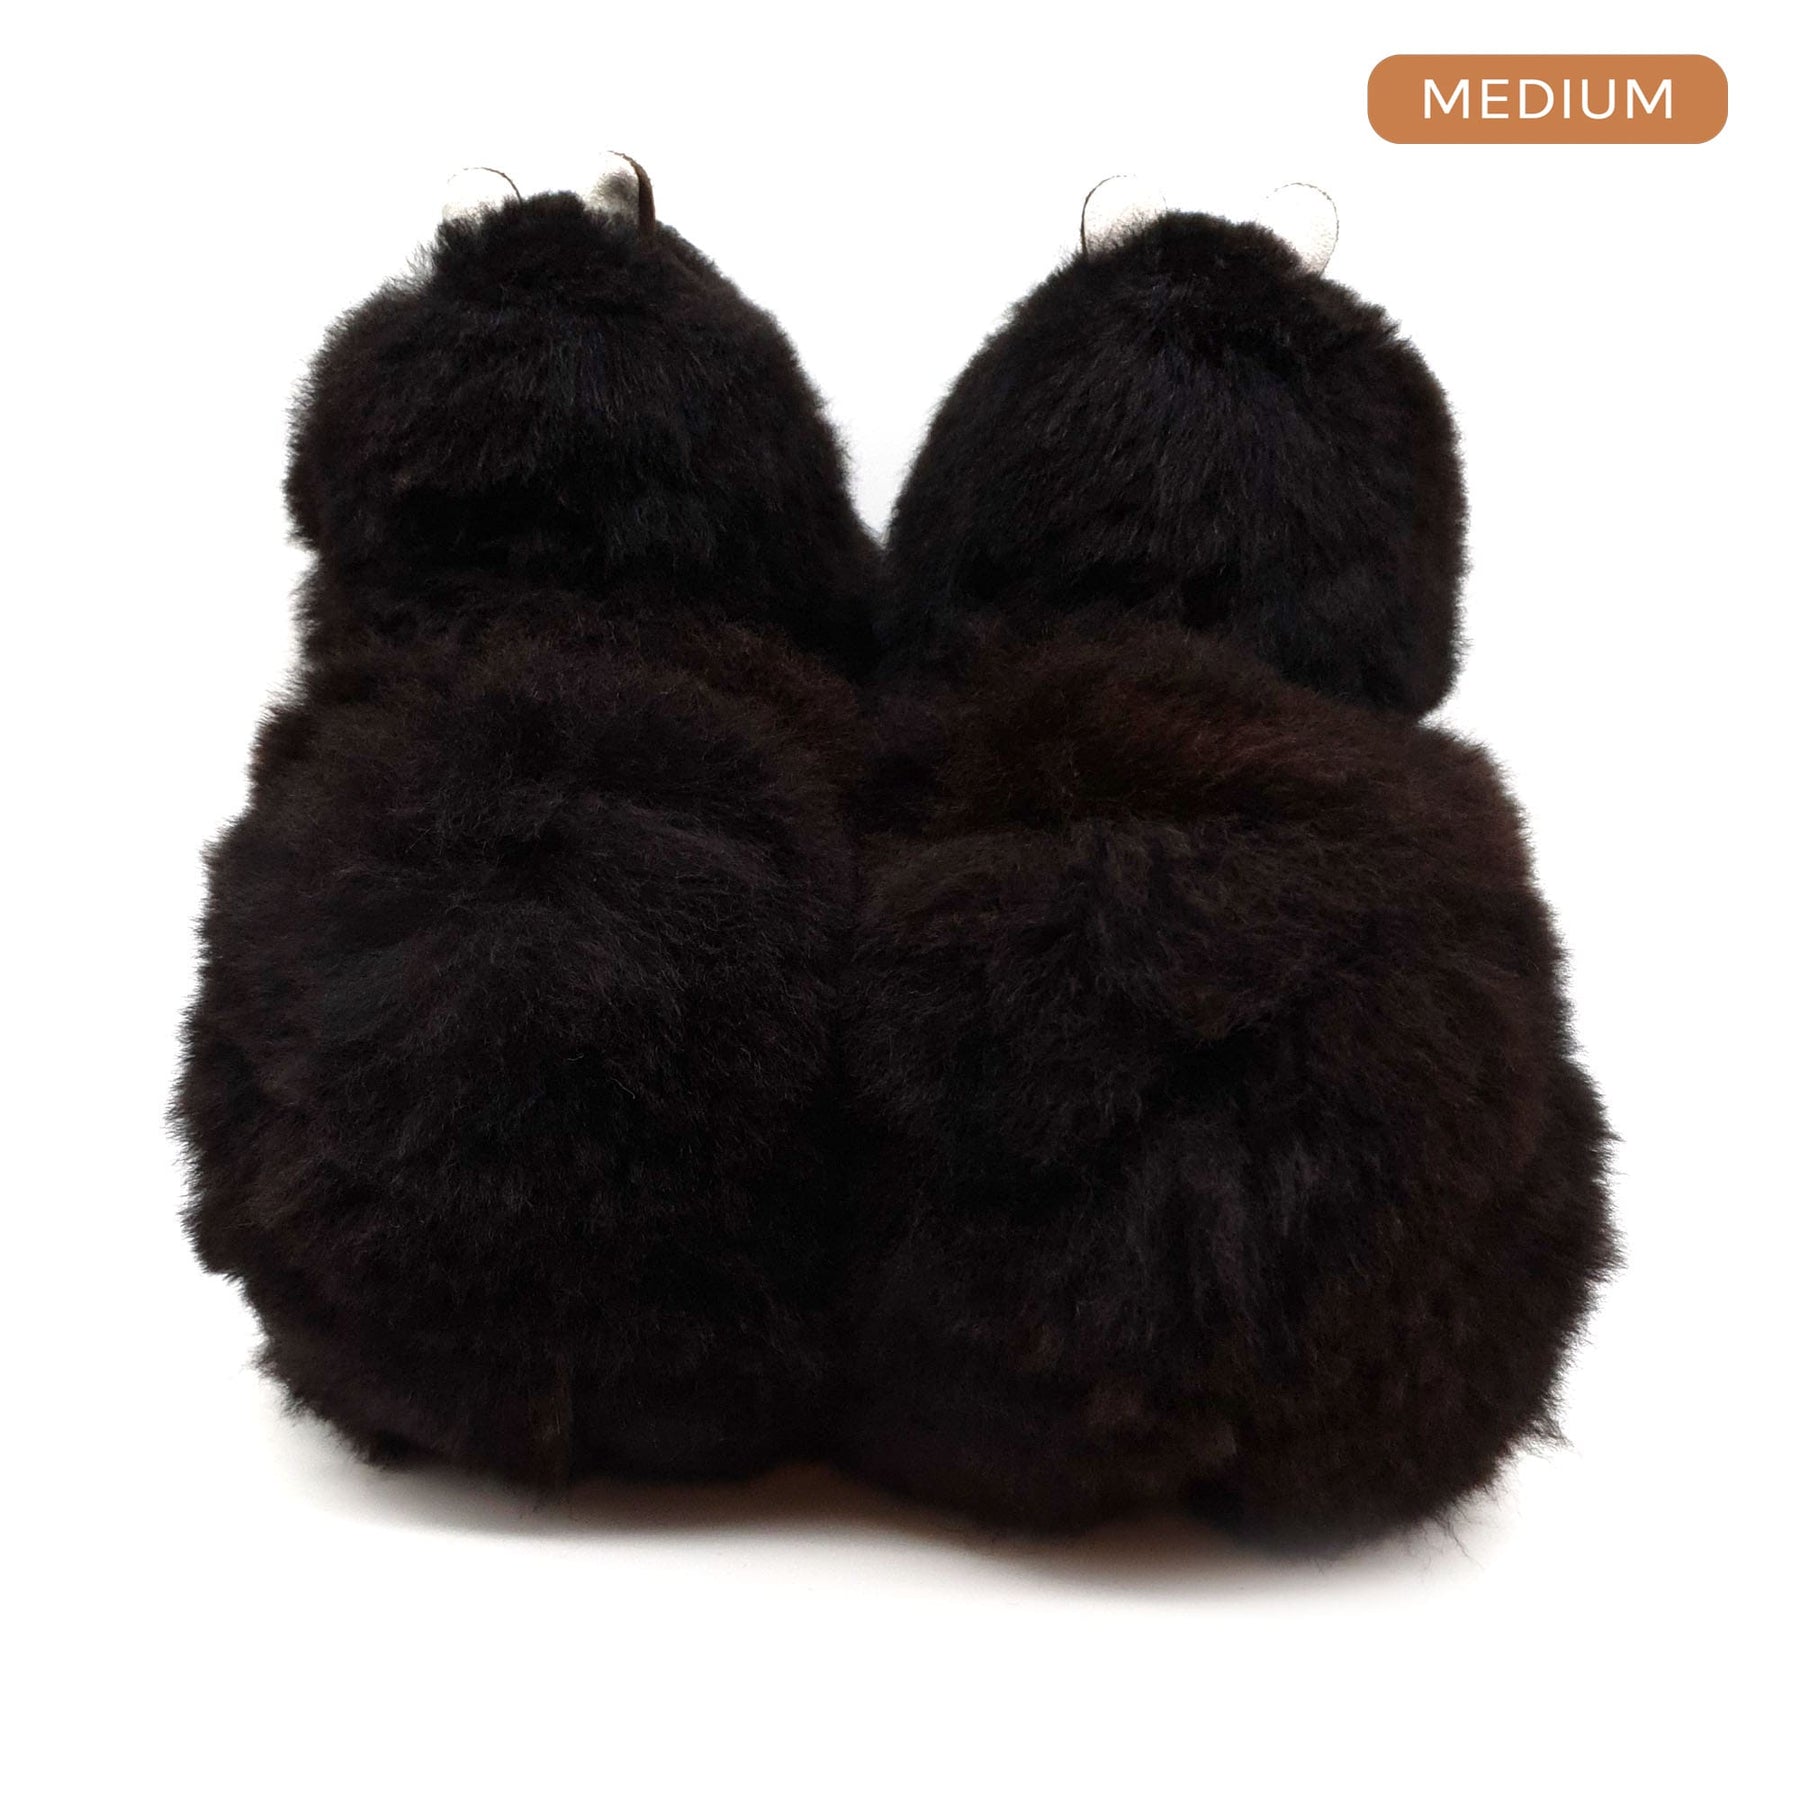 Black Panther - Middelgroot Alpaca-speelgoed (32 cm) - Beperkte editie